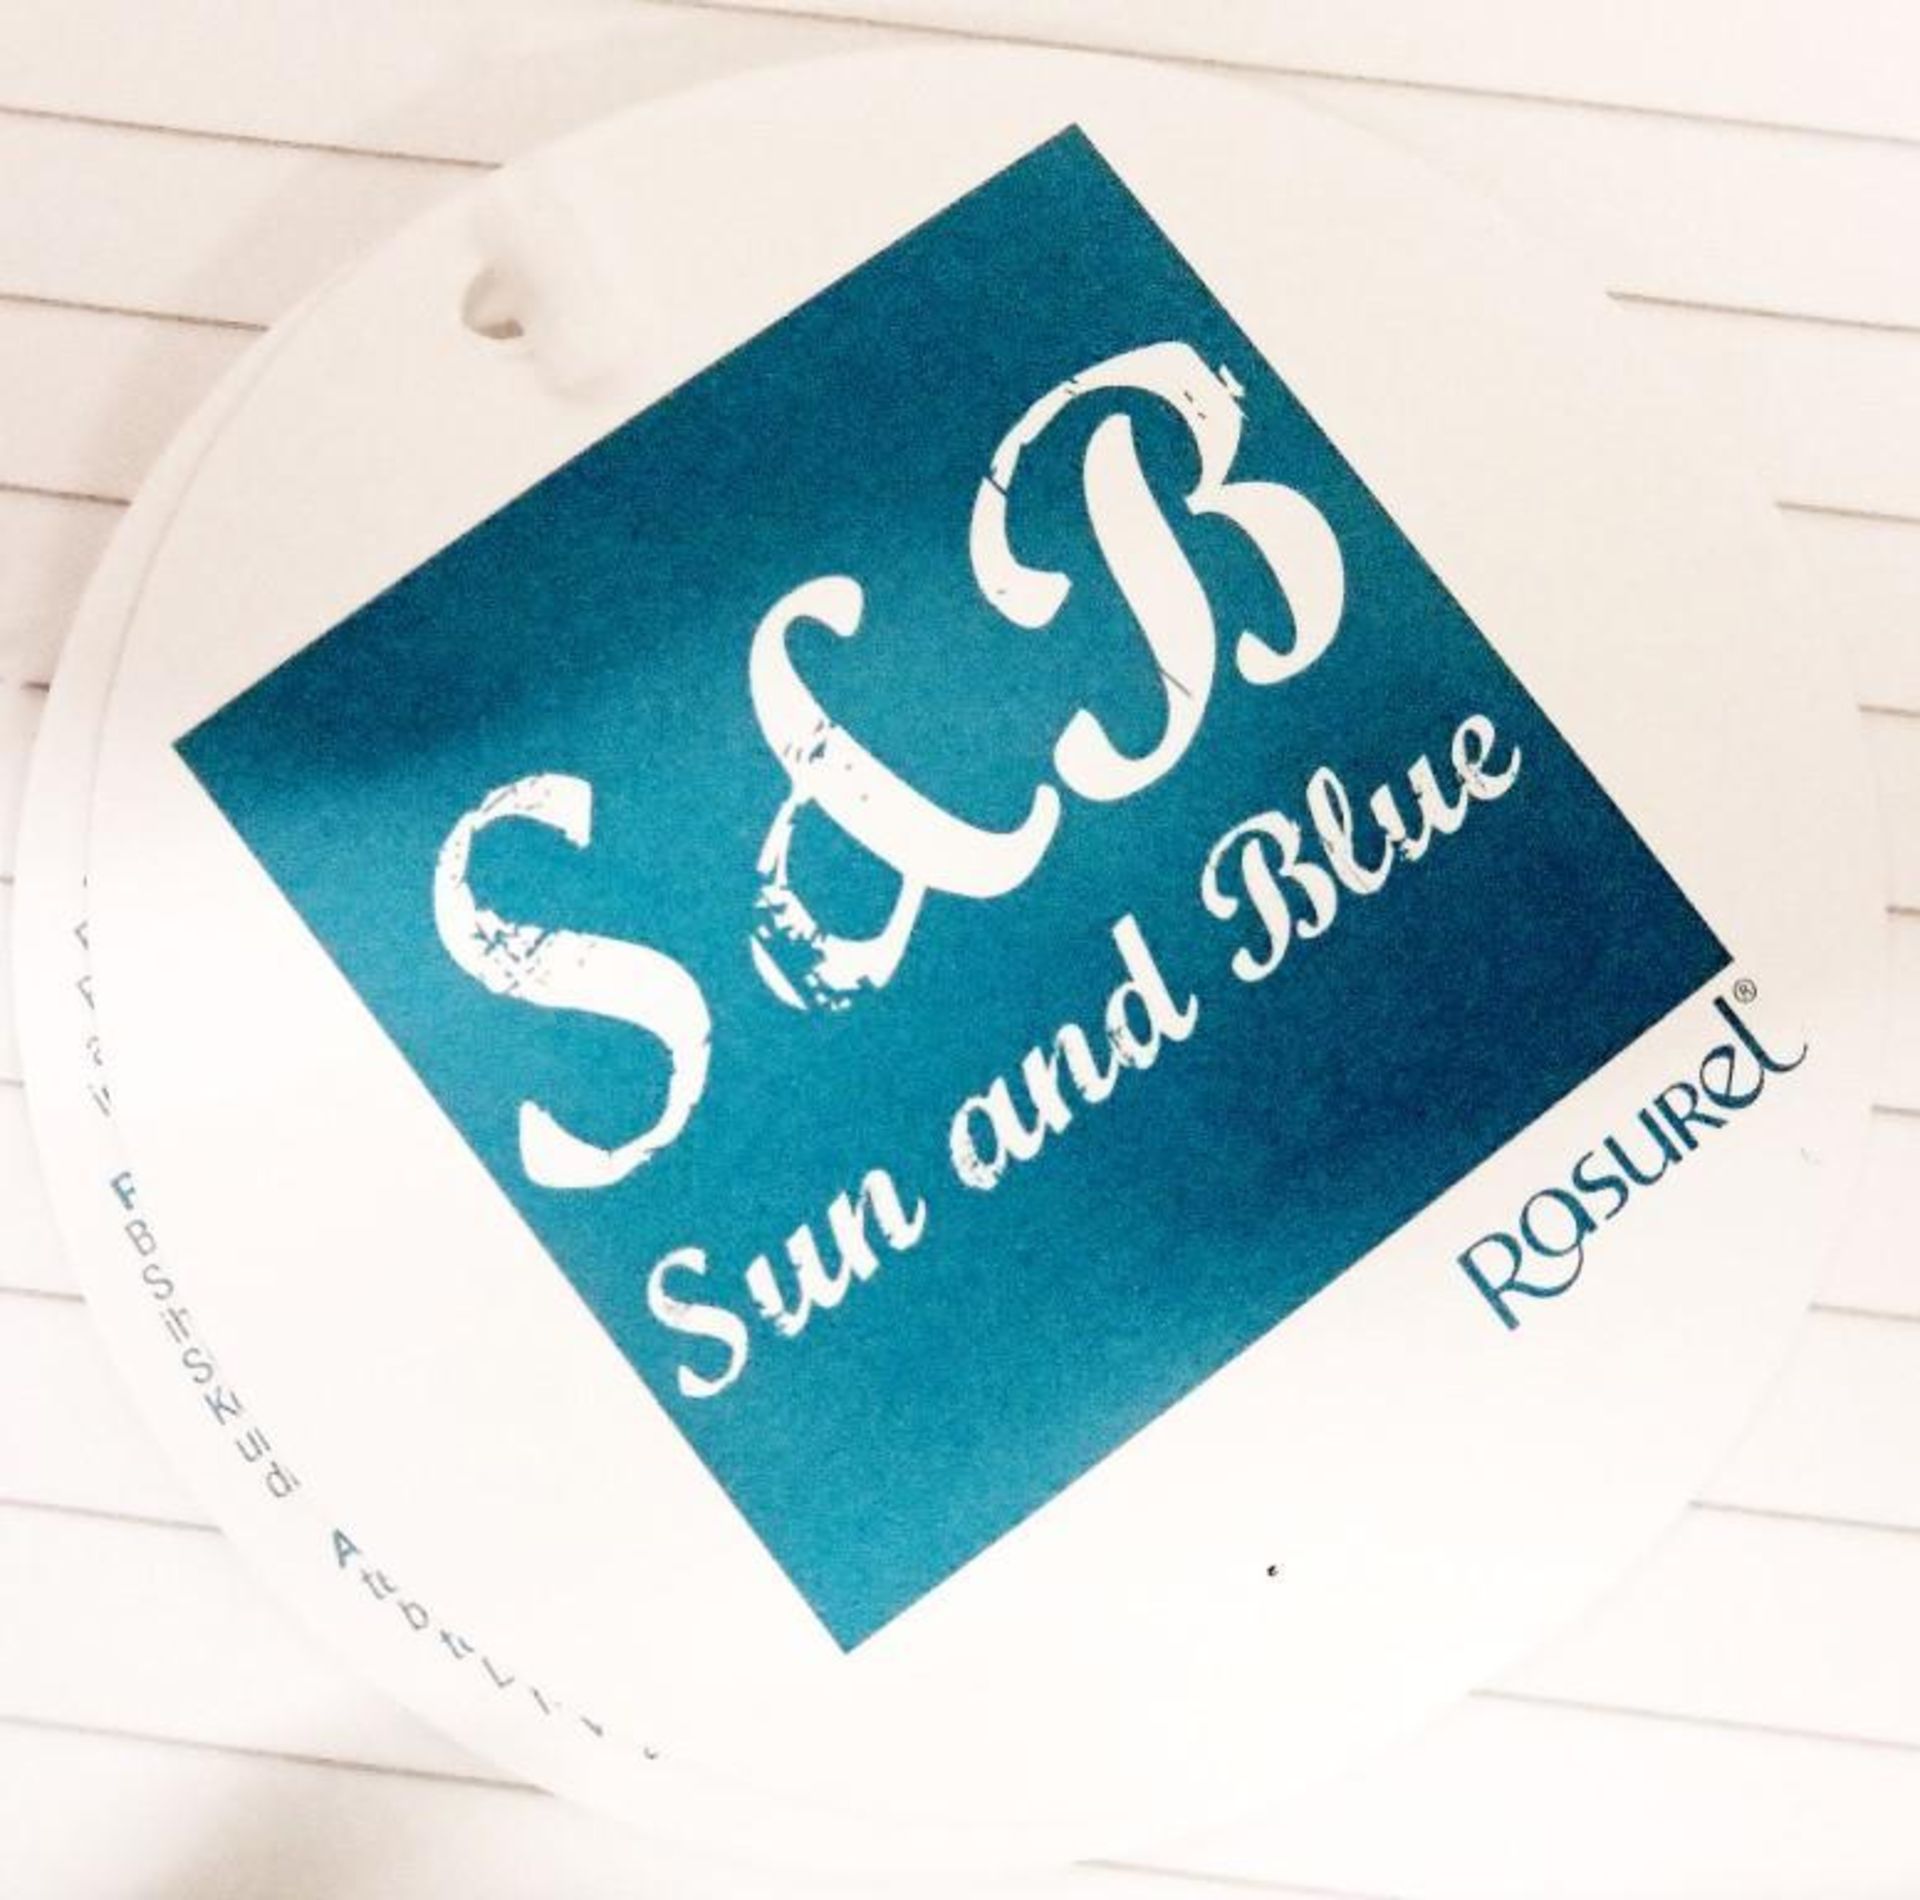 1 x Rasurel - Sun and Blue Swimsuit - B20531 Passiflore Size 2 - UK 32 - Fr 85 - EU/Int 70 - Ref: JR - Image 6 of 7